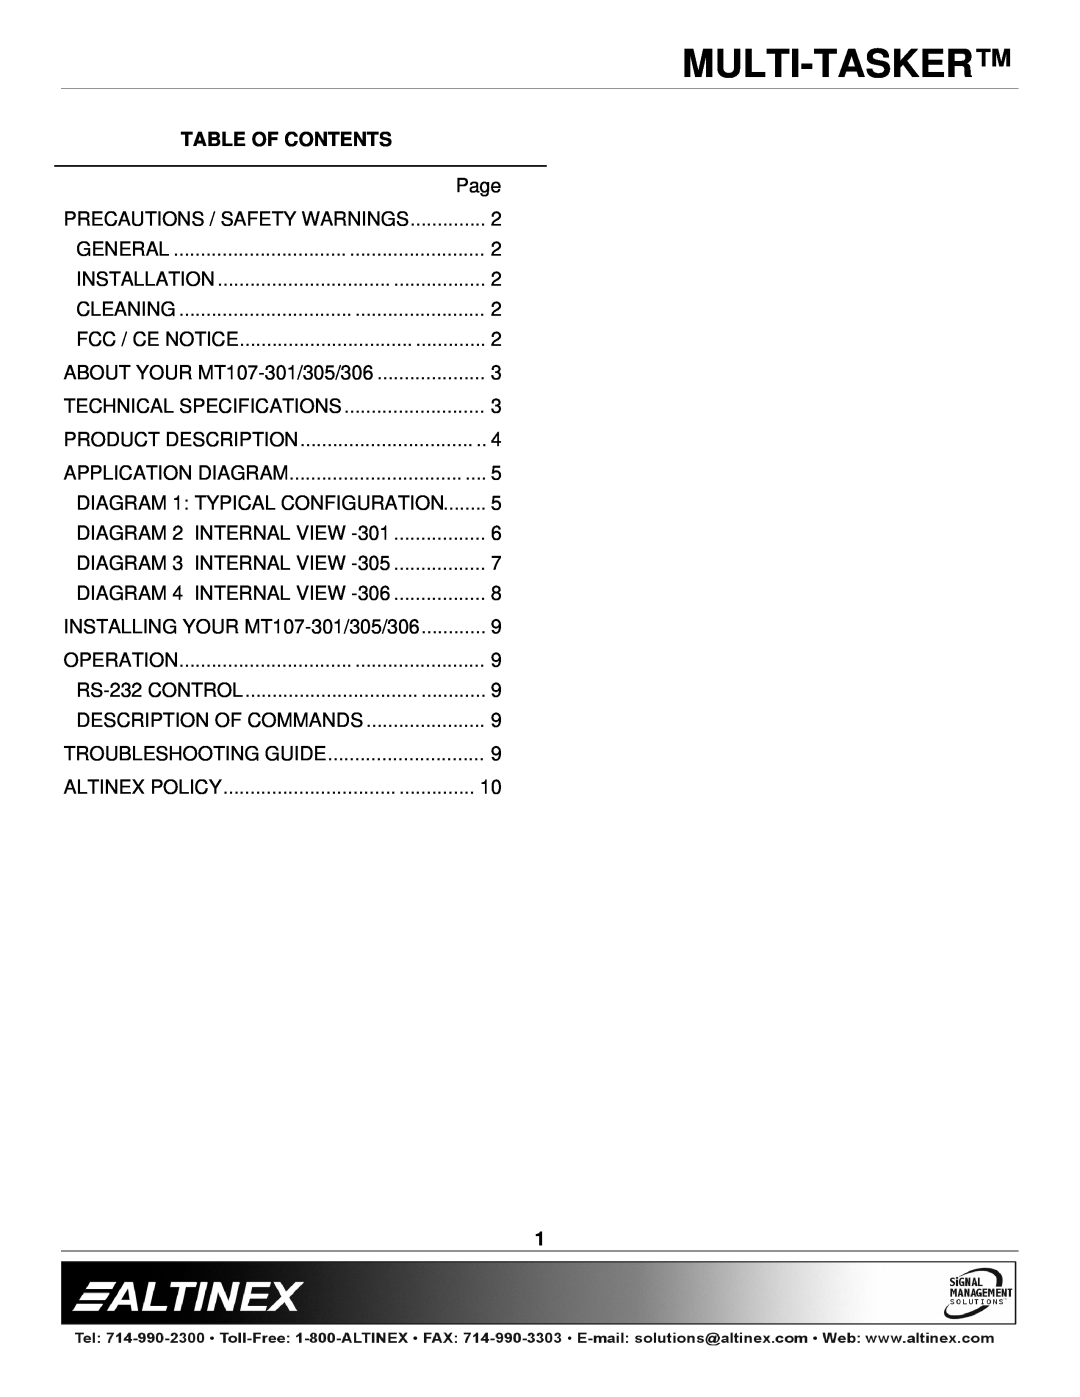 Altinex MT107-301, MT107-306, MT107-305 manual Table Of Contents, Multi-Tasker, Page, Application Diagram 